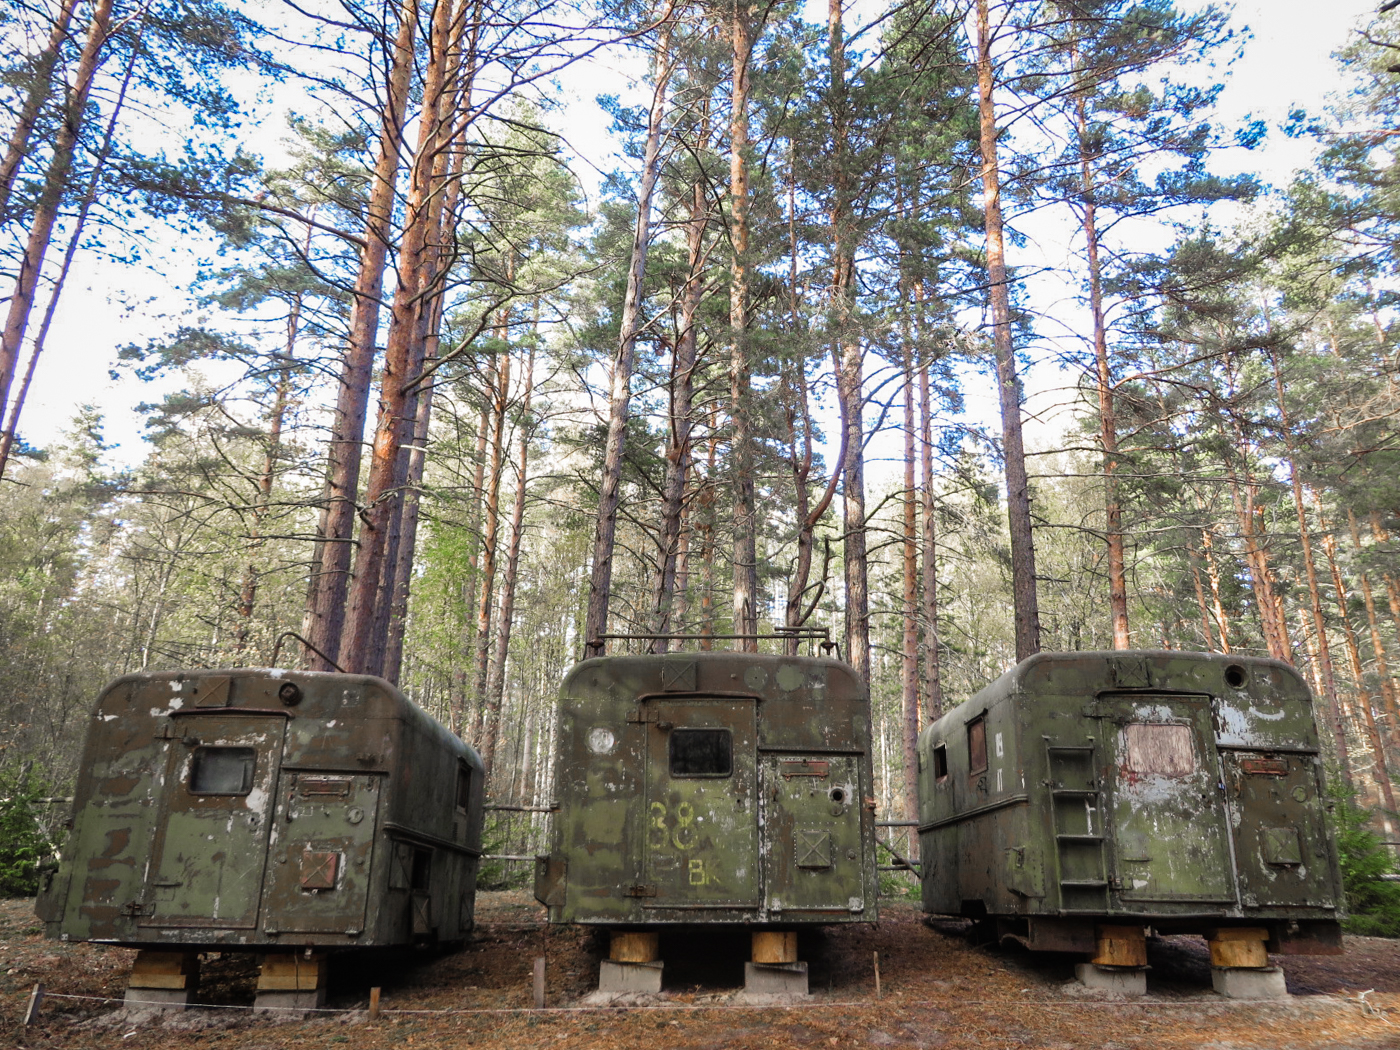 Tanques da Segunda Guerra Mundial na floresta